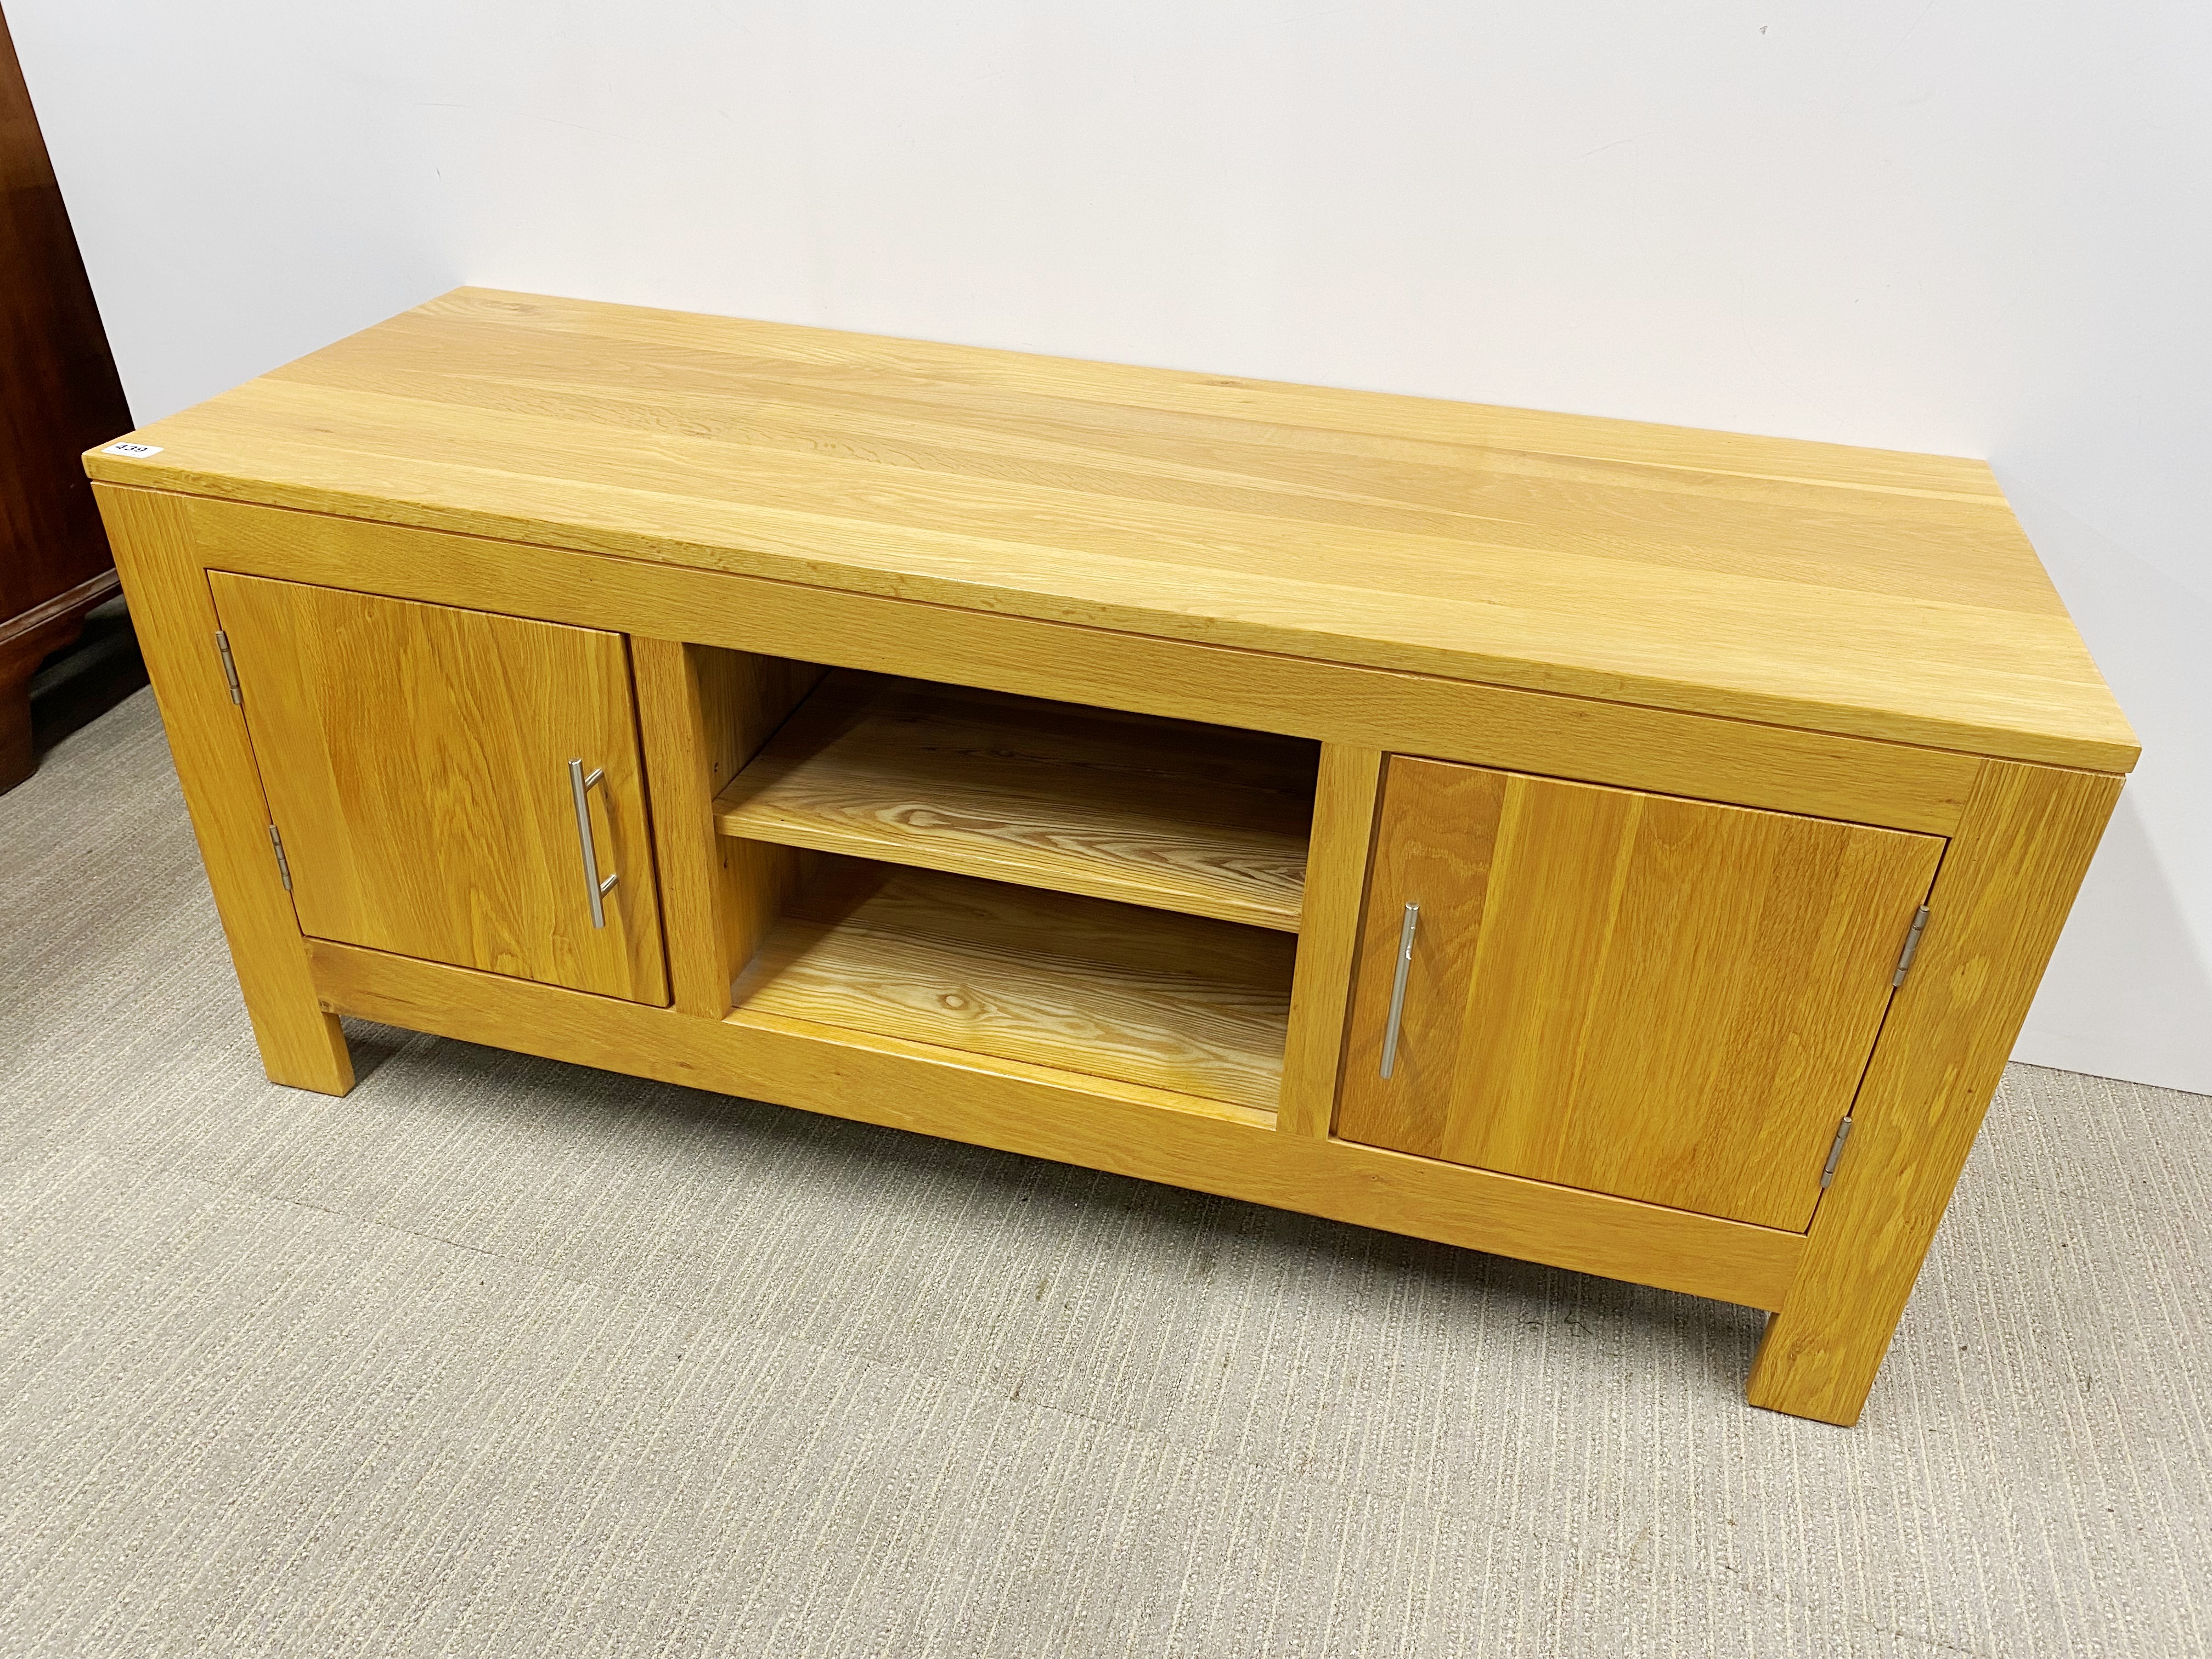 A heavy quality light oak TV stand/hifi cabinet, L. 139 x 50 x 60cm. - Image 2 of 2